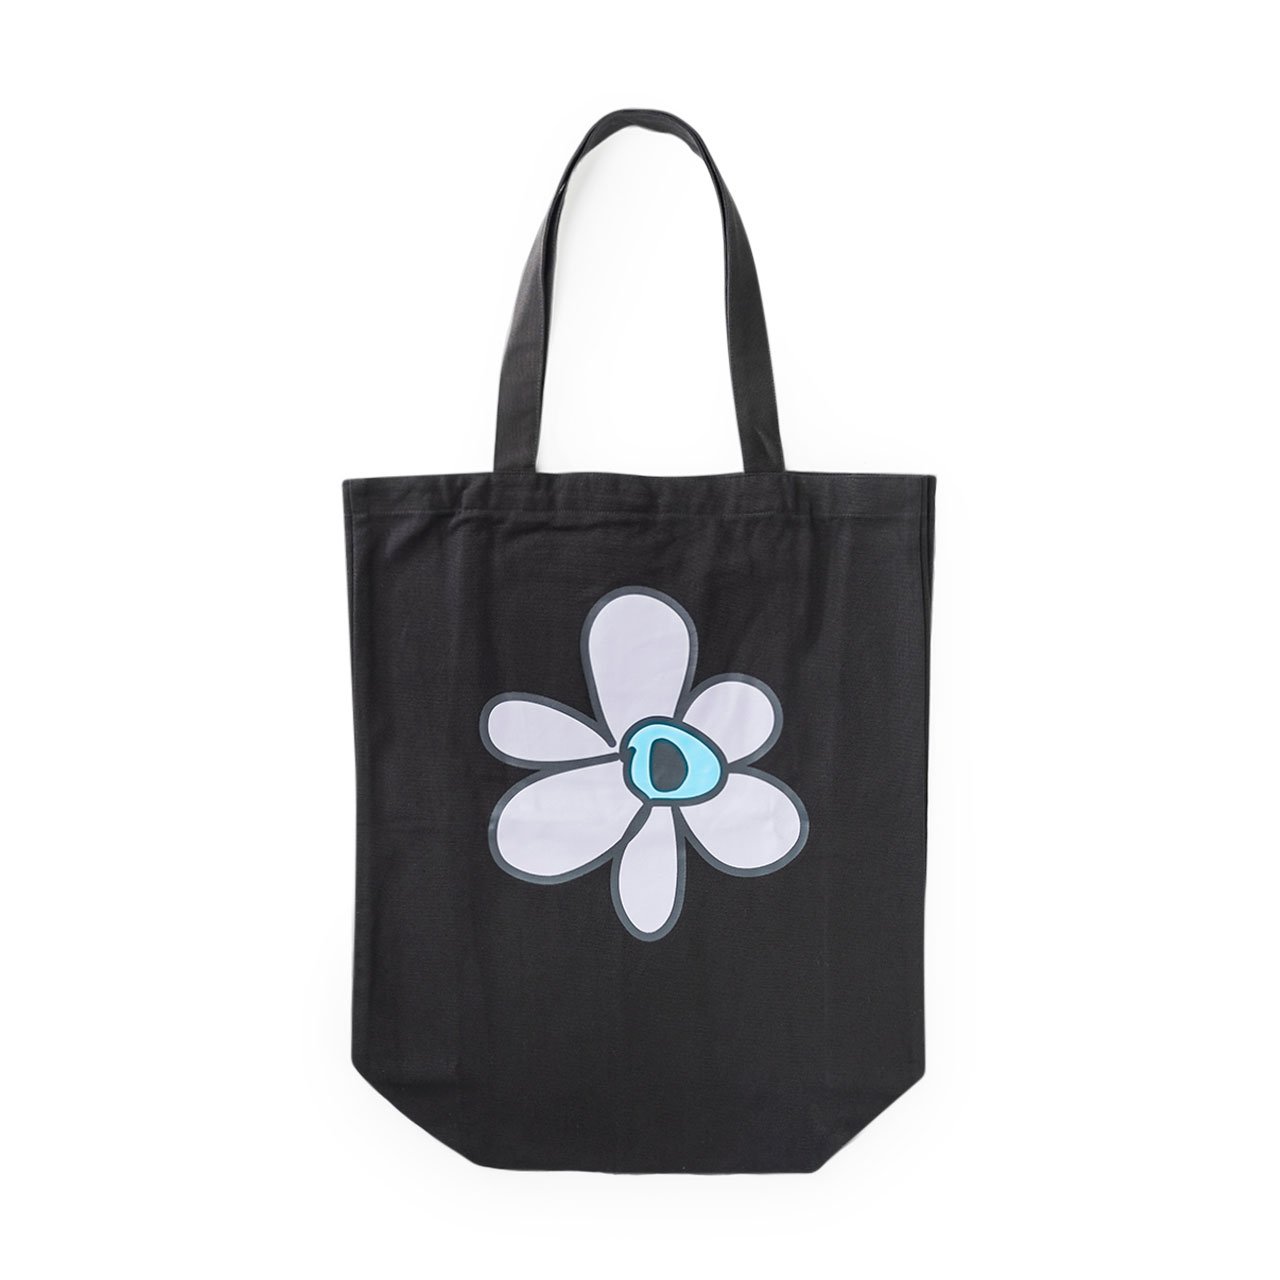 perks and mini gesture tote bag (black) - 9790-a-b - a.plus - Image - 1